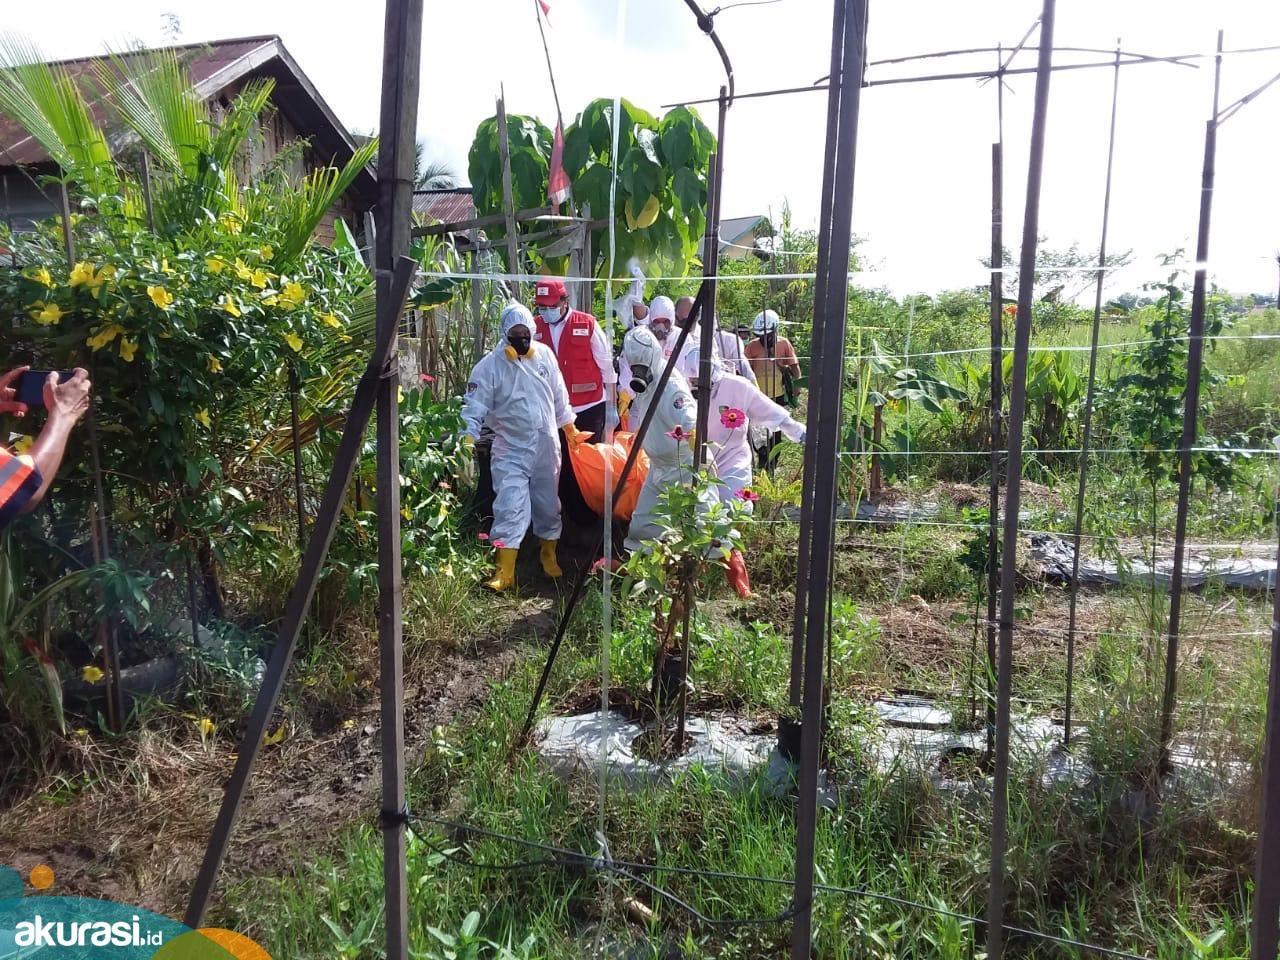 Niatnya Bersihkan Kebun, Warga Sungai Pinang Malah Dikejutkan dengan Mayat Tergantung di Pohon